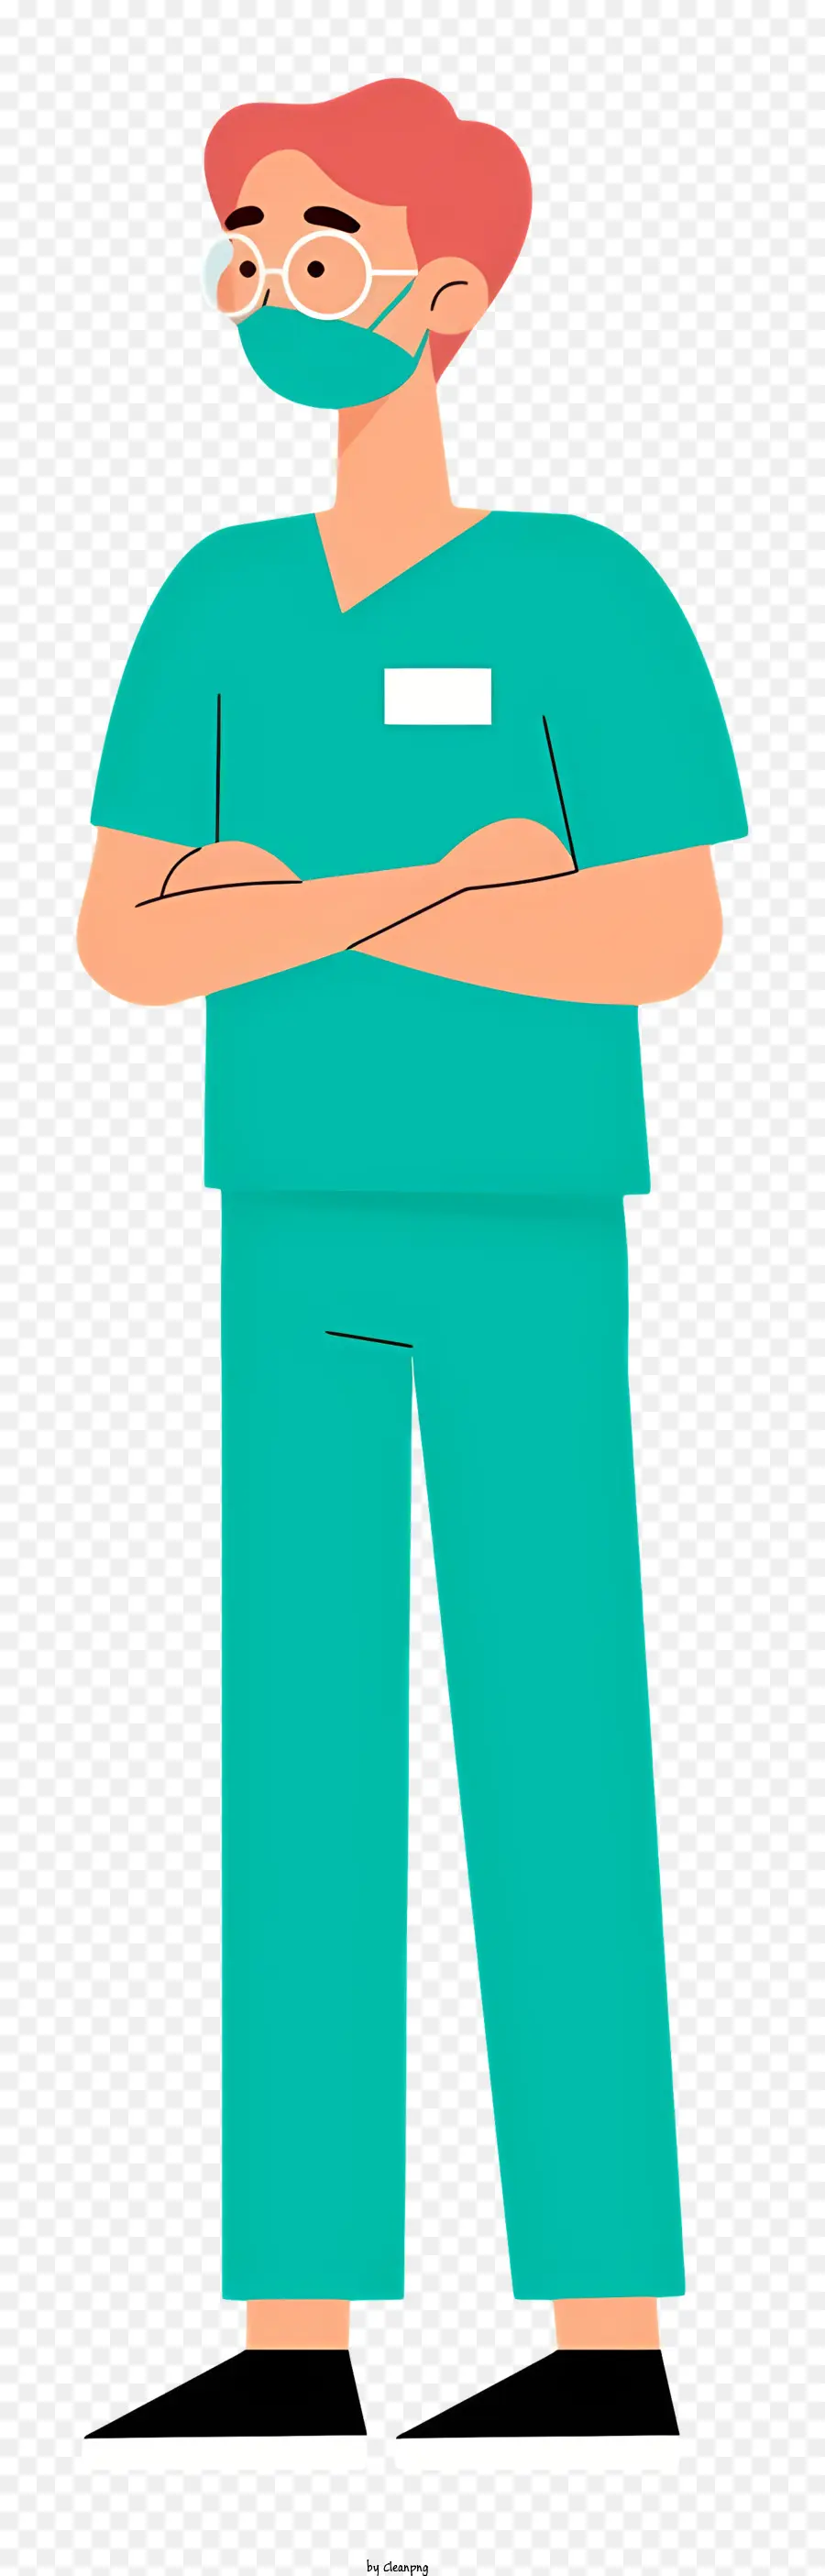 Cartoon Charakter Green Scrubs Chirurgische Maskenkrankenhausklinik Klinikumgebung - Cartoon -Person in Peelings mit verschränkten Armen